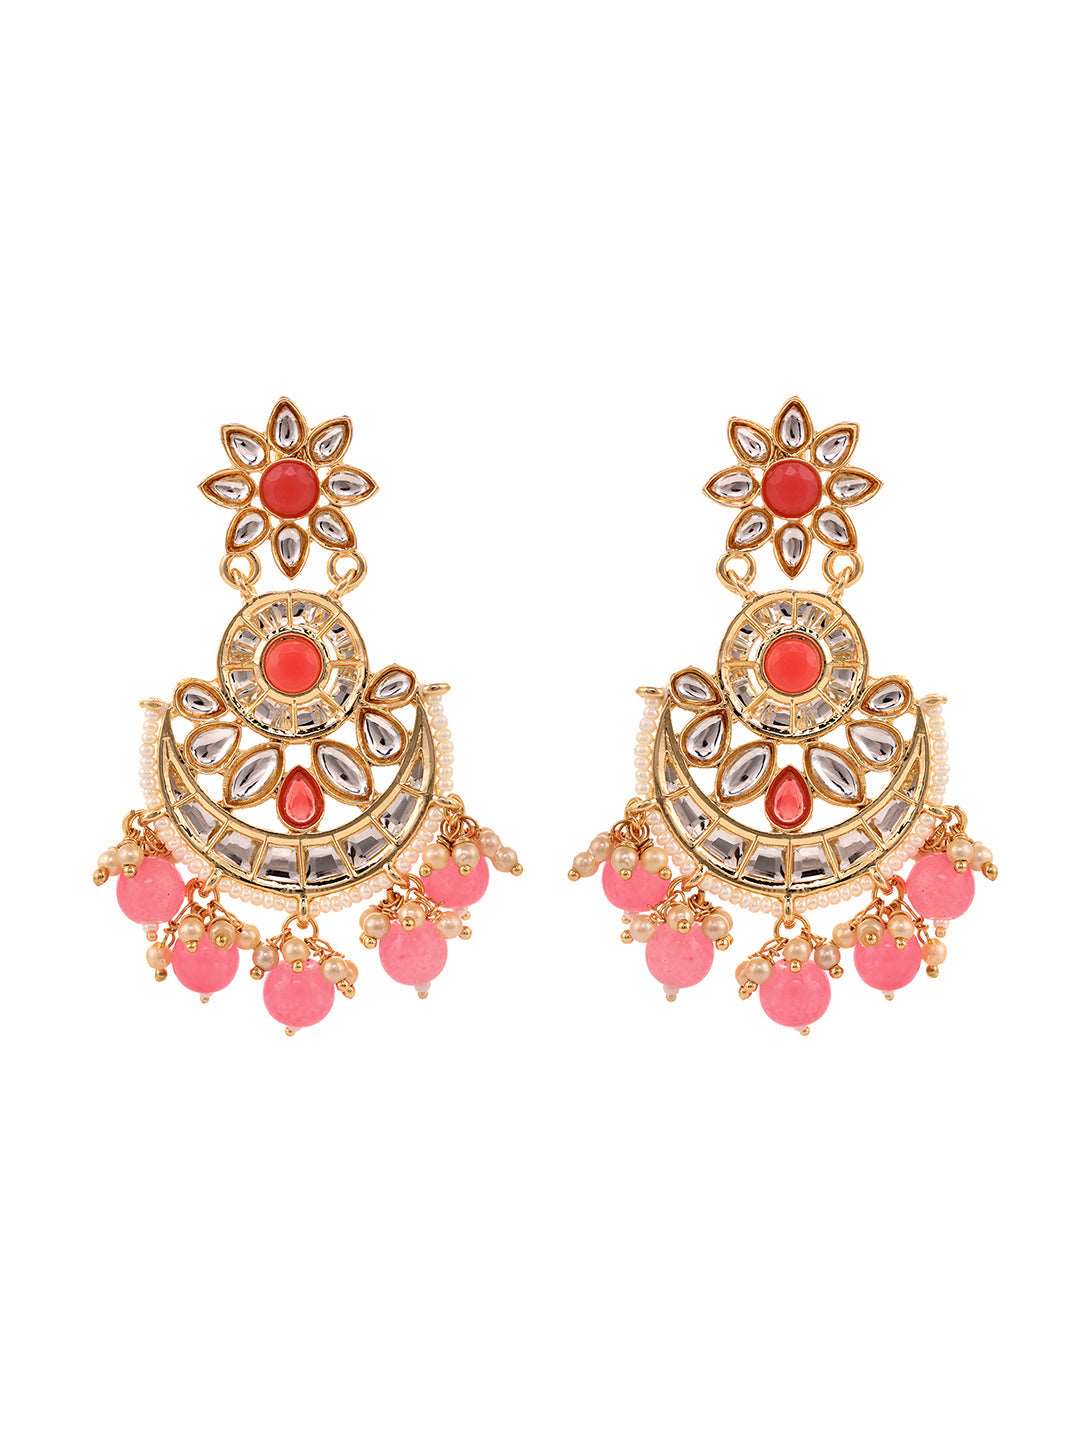 Gold Plated Kundan studded Pink & White Pearl beadded Maangtika Earring Jewellery Set, zaveri pearls, sale price rs, sale price, sale gold plated, sale gold, sale, rubans, ring, regular price